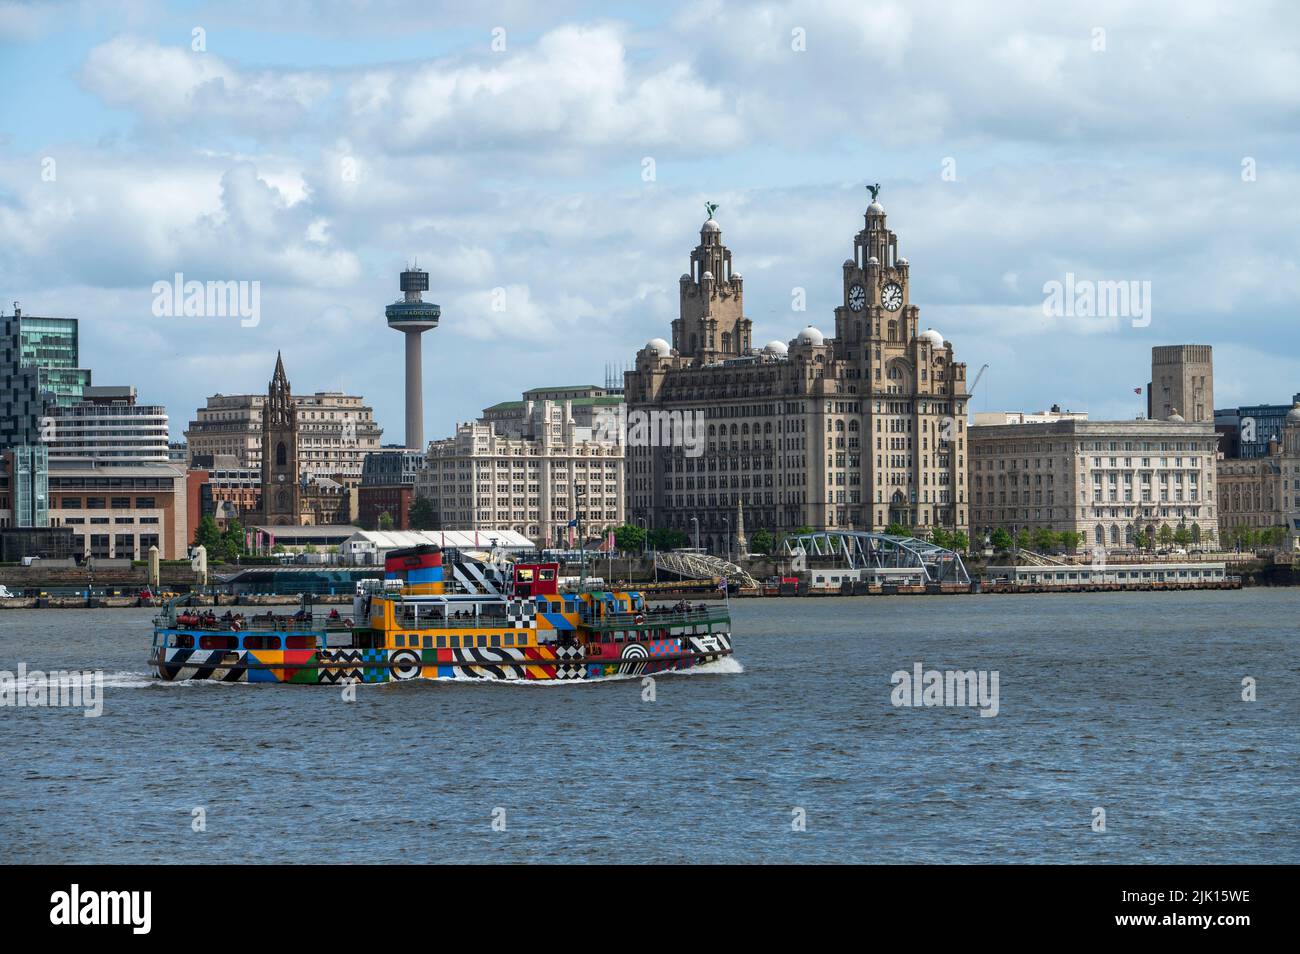 Le ferry Mersey Snowdrop naviguant en face du front de mer de Liverpool, Liverpool, Merseyside, Angleterre, Royaume-Uni, Europe Banque D'Images